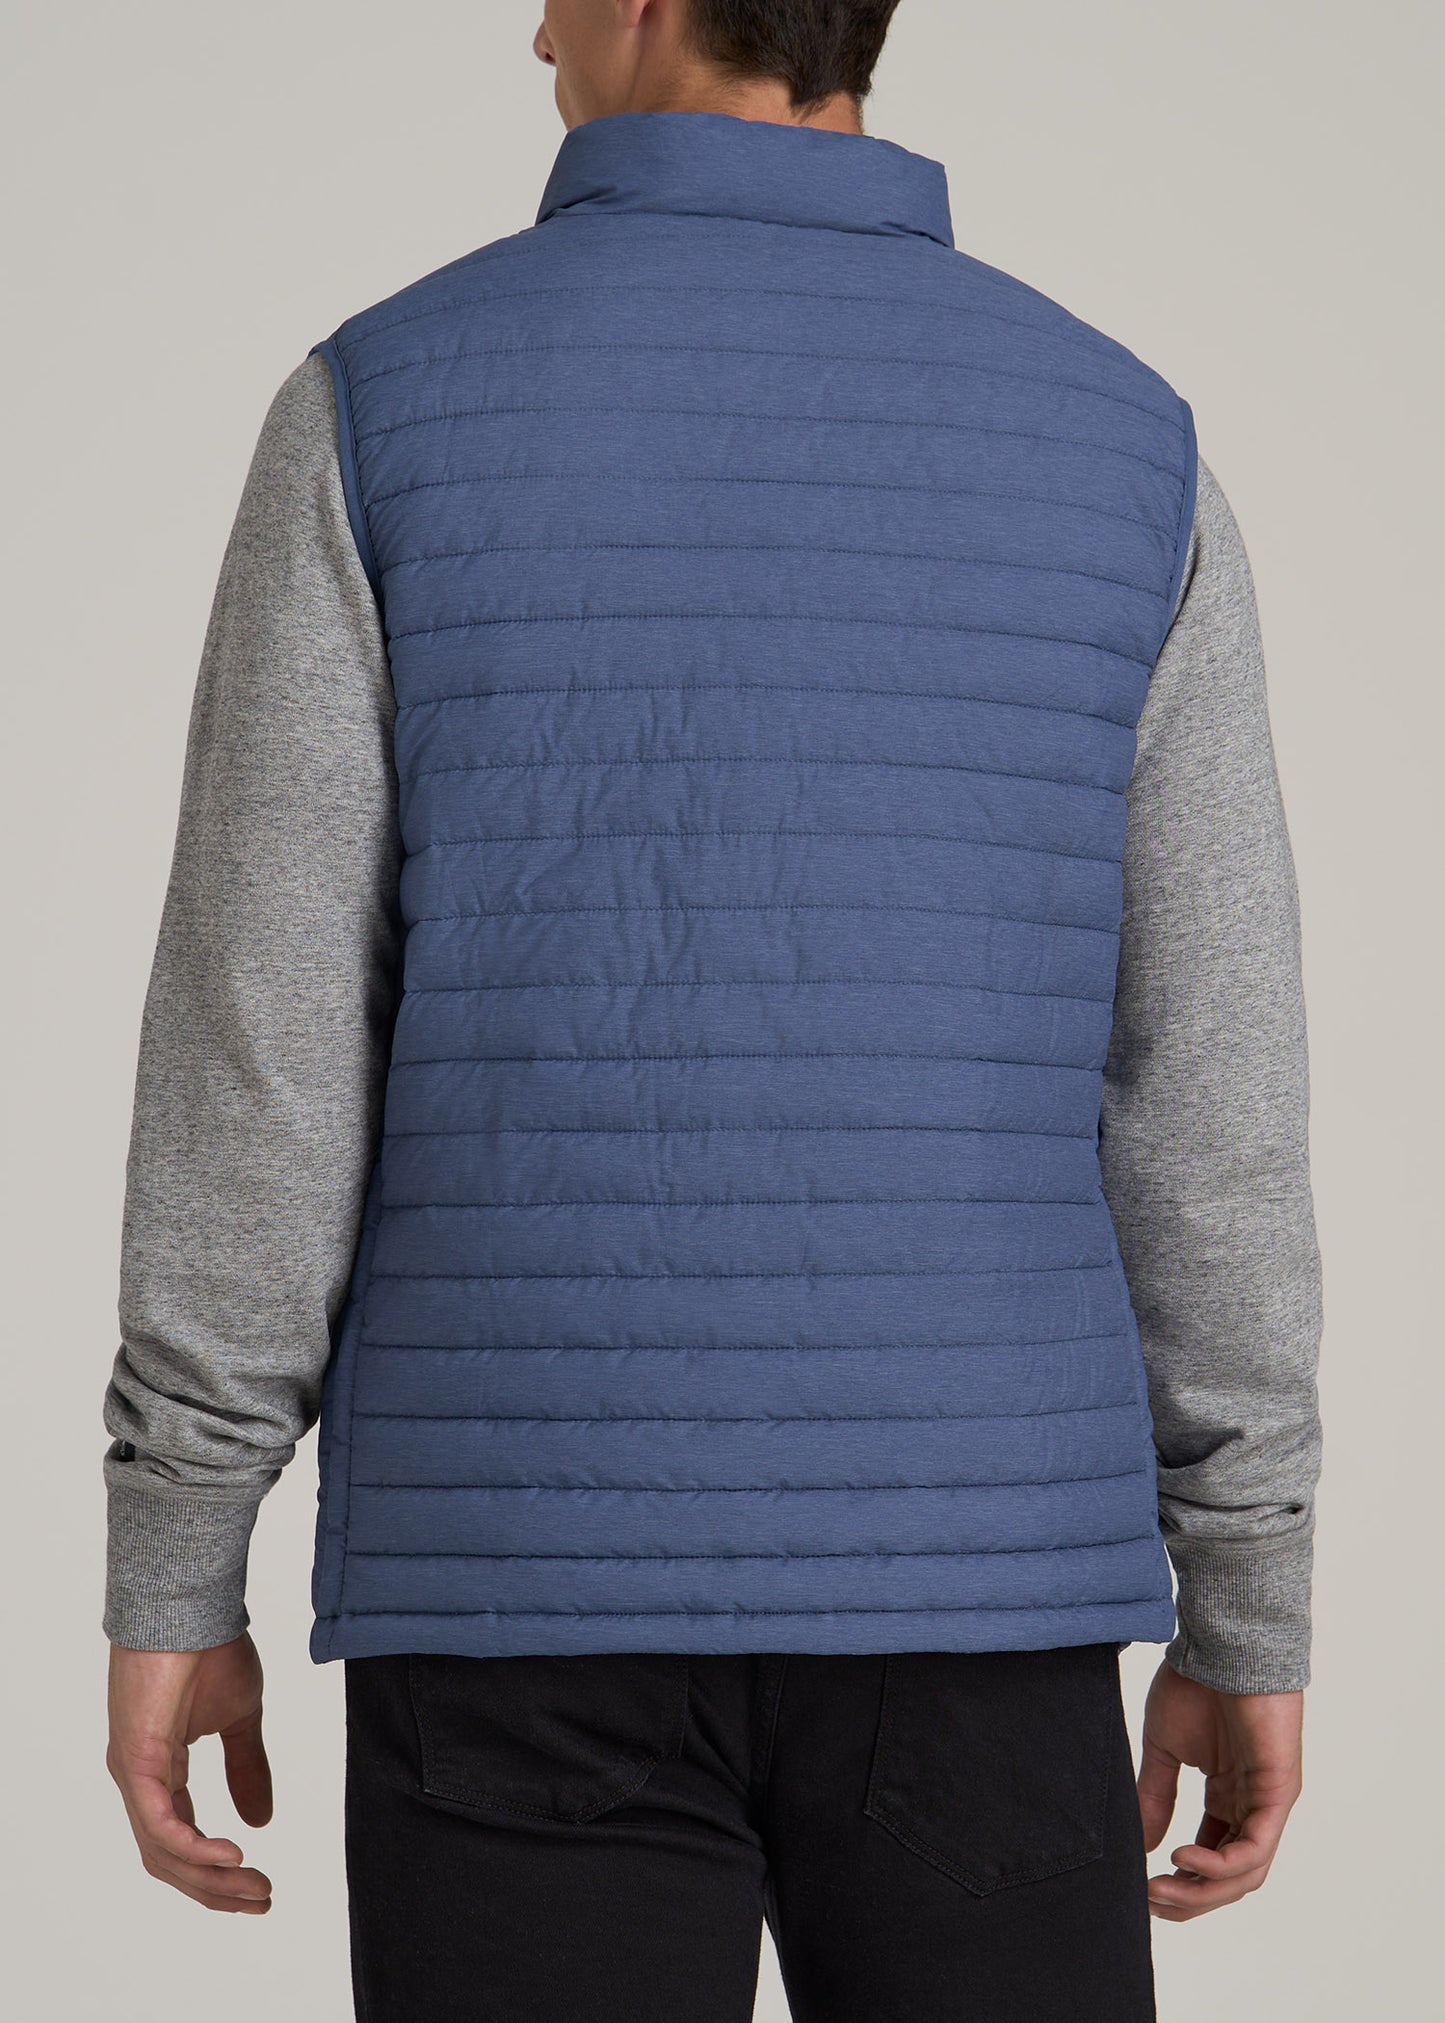 Tall Men's Packable Puffer Vest in Steel Blue